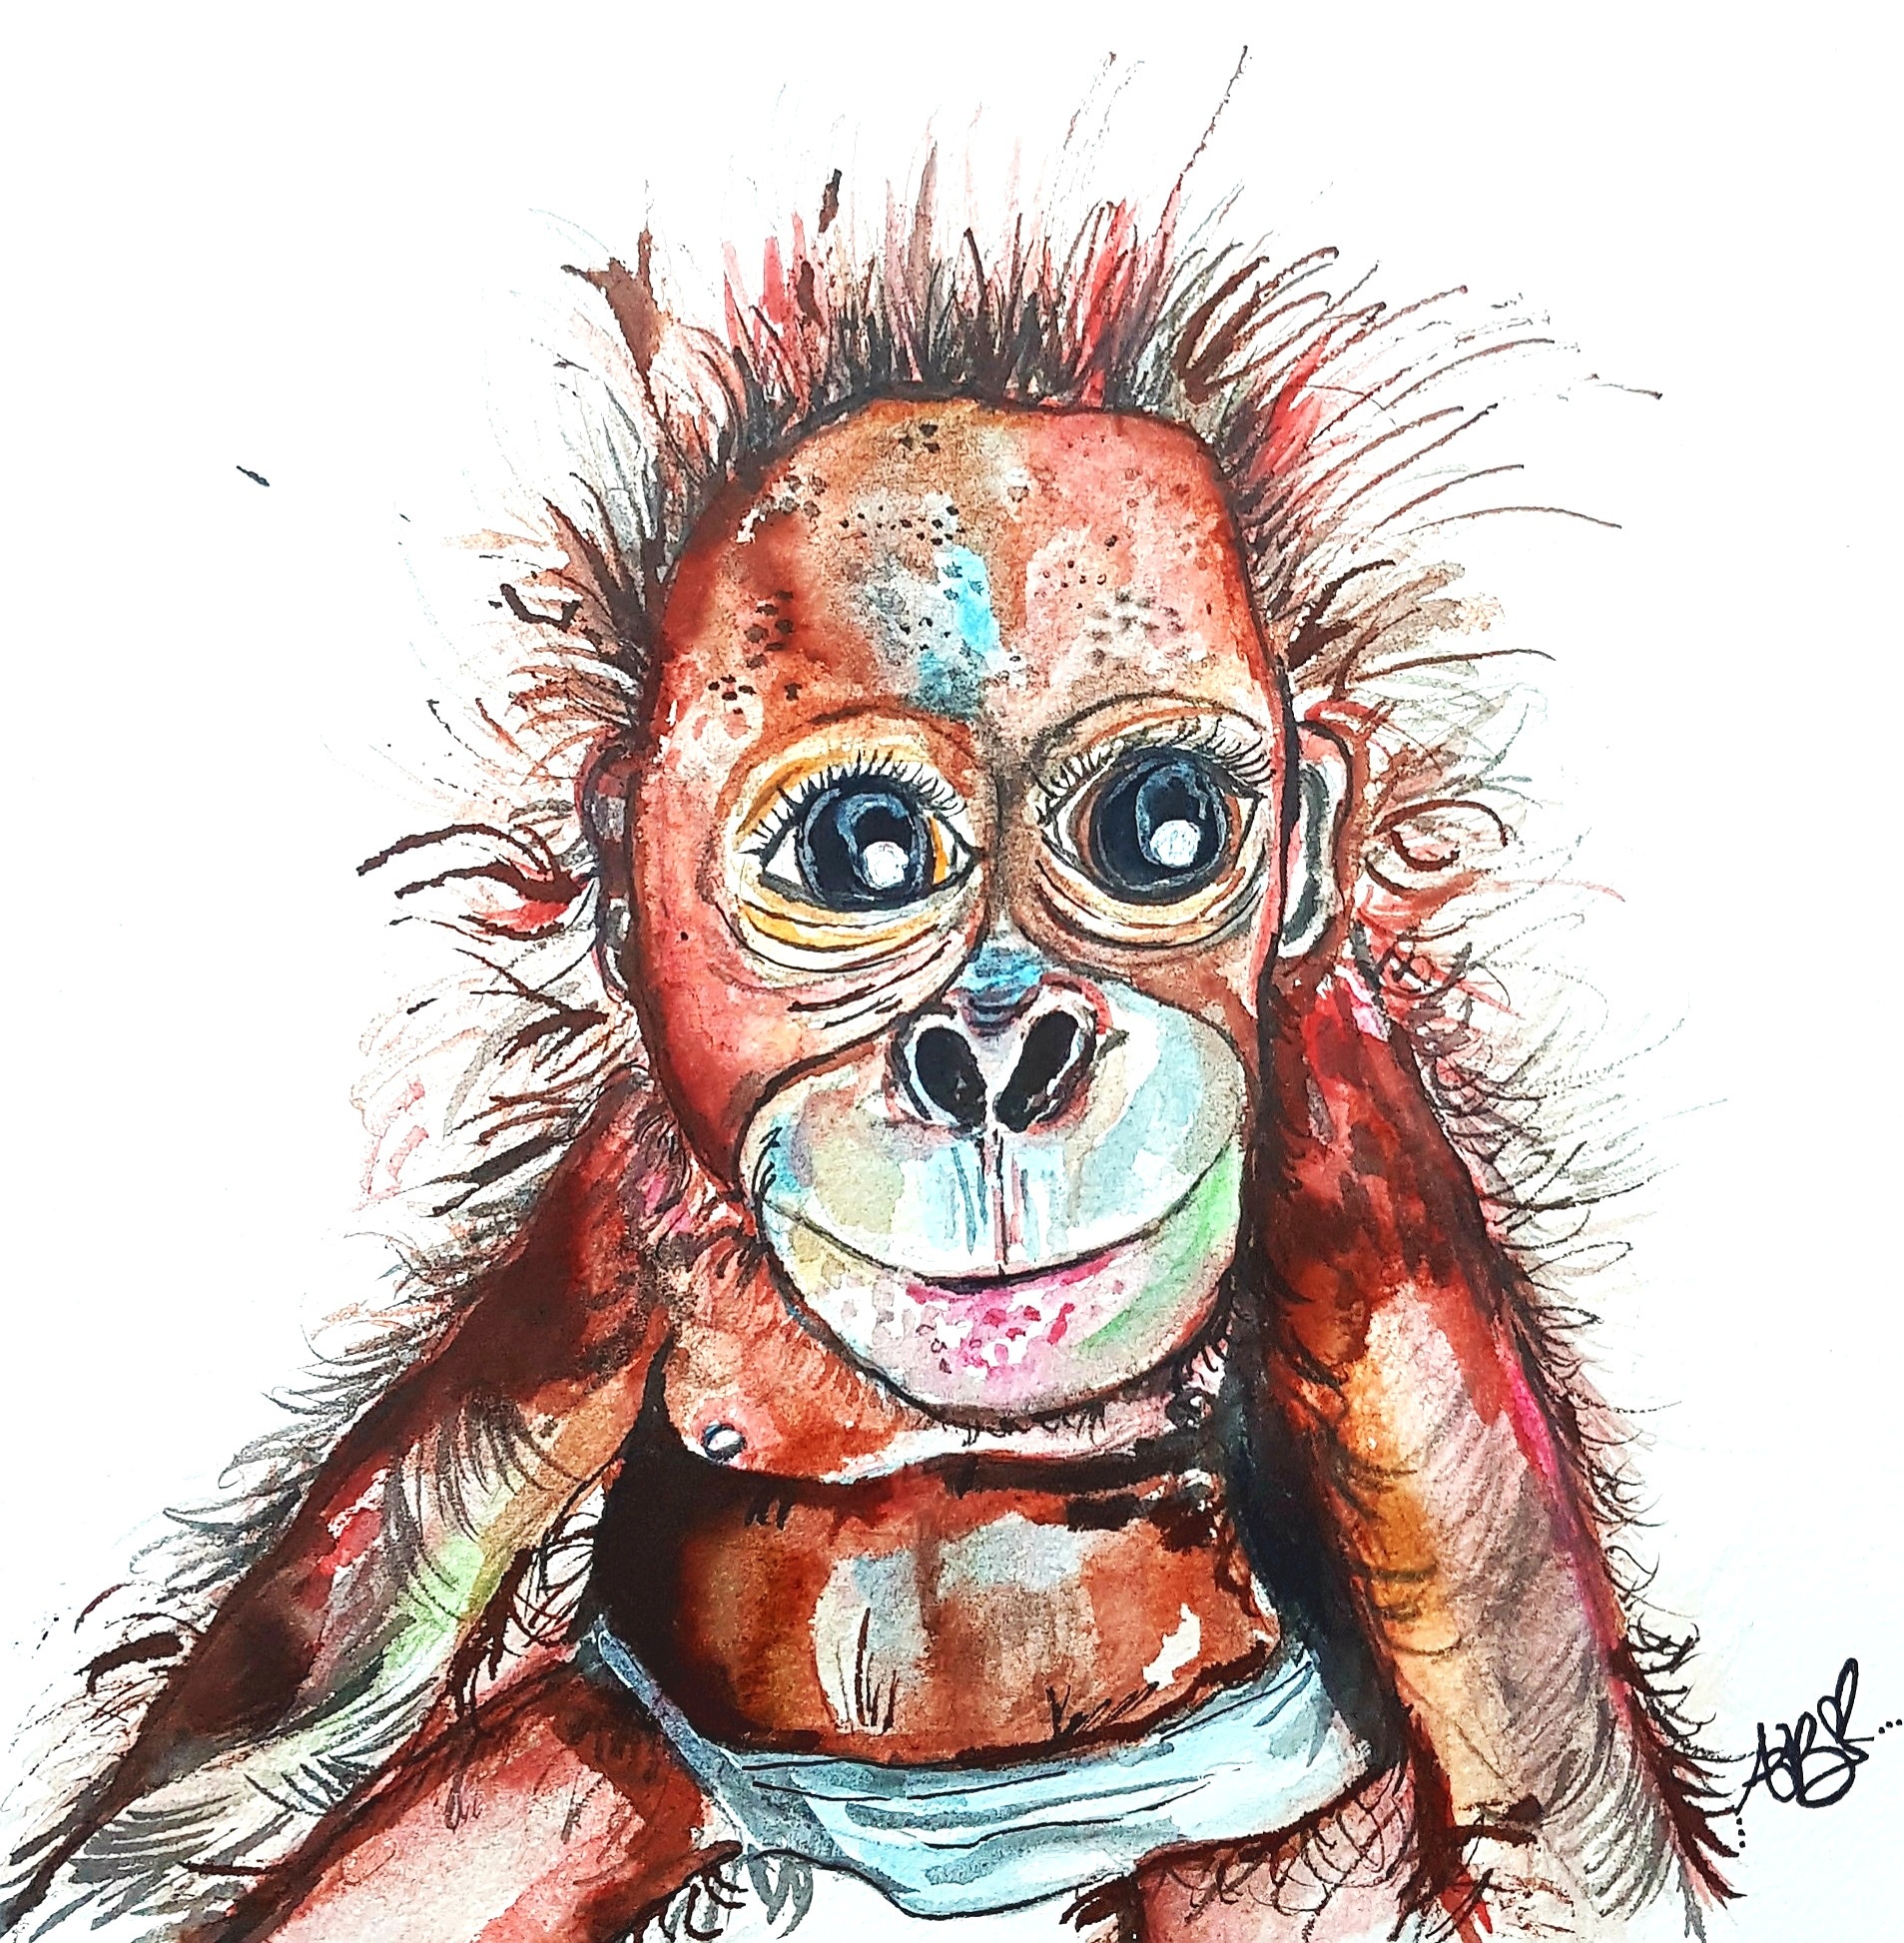 "Ottis" - The Baby Orangutan (2019)